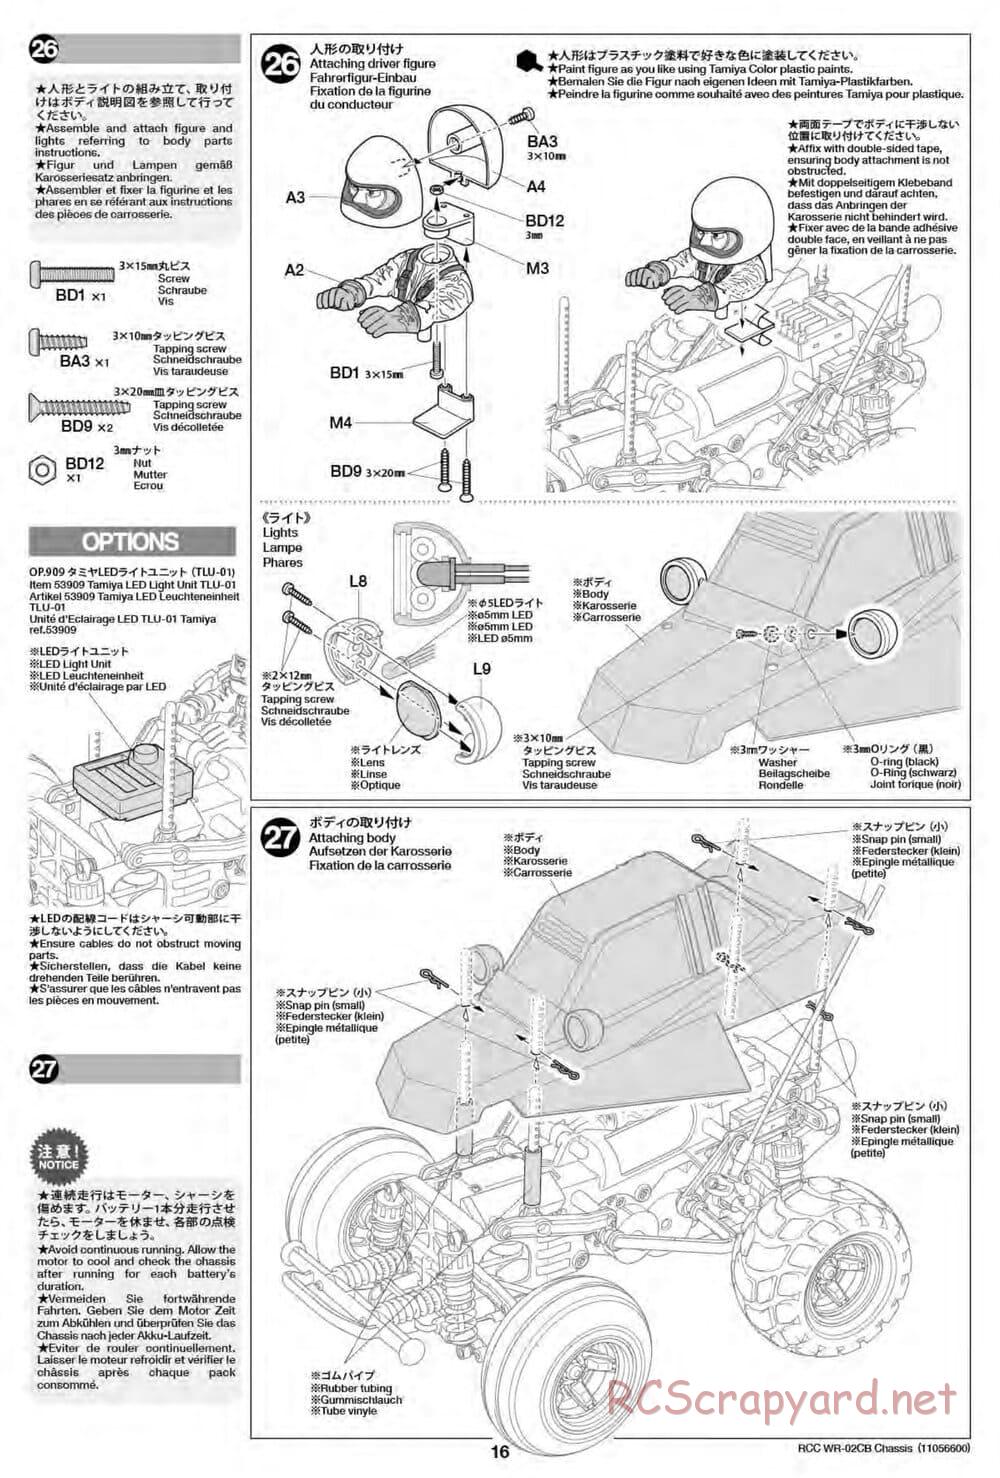 Tamiya - WR-02CB Chassis - Manual - Page 16